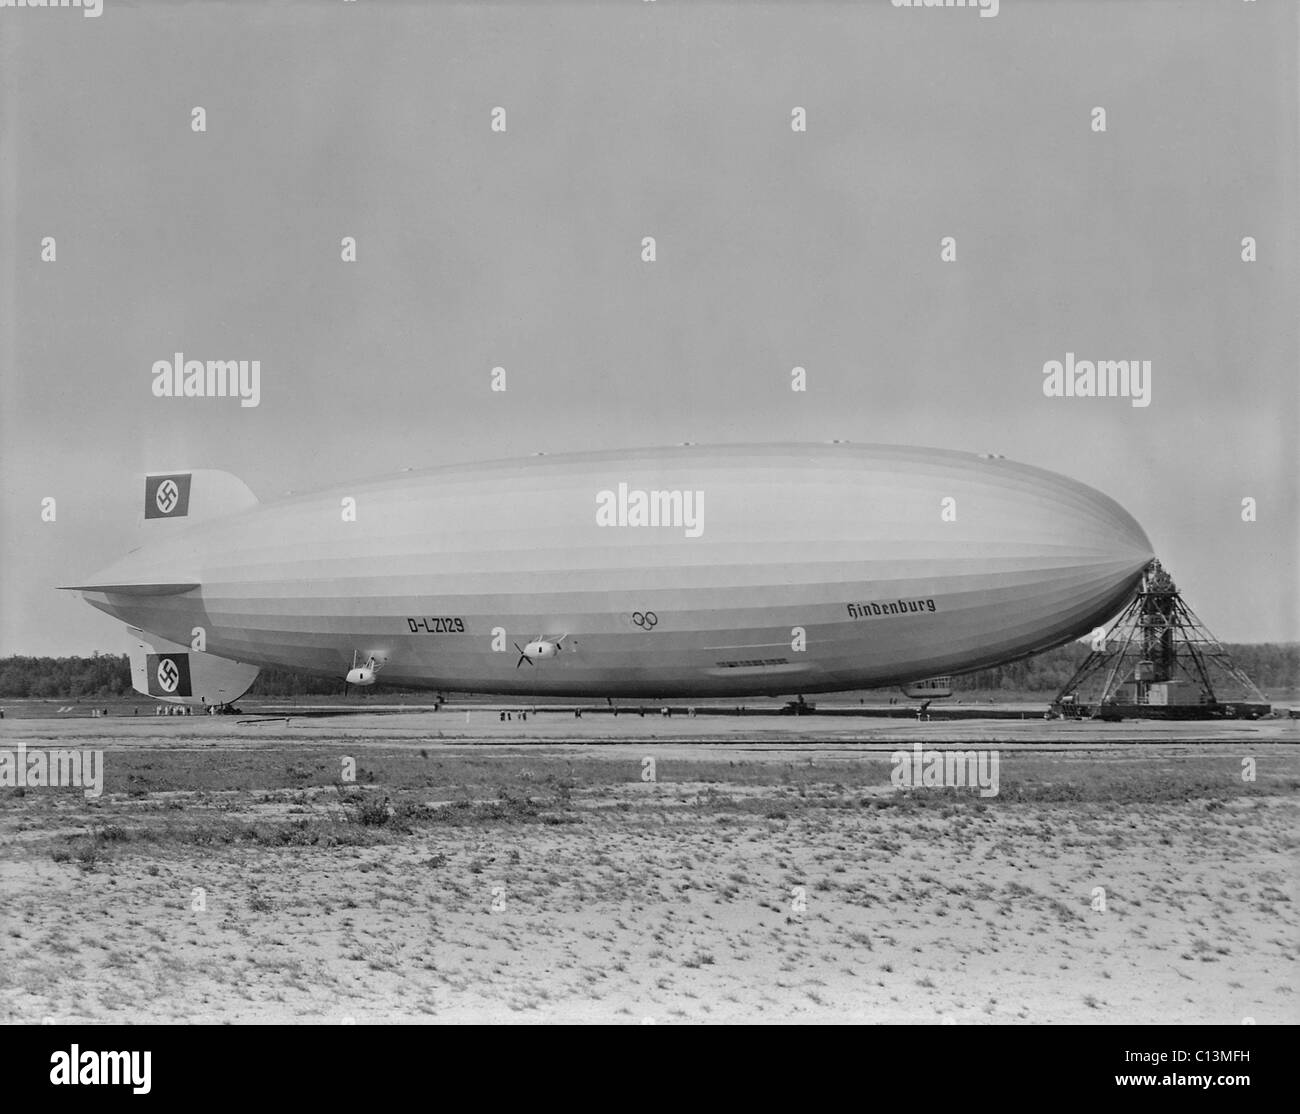 German airship HINDENBURG moored at Lakehurst New Jersey. Ca. 1933-1937  15-1418M Stock Photo - Alamy